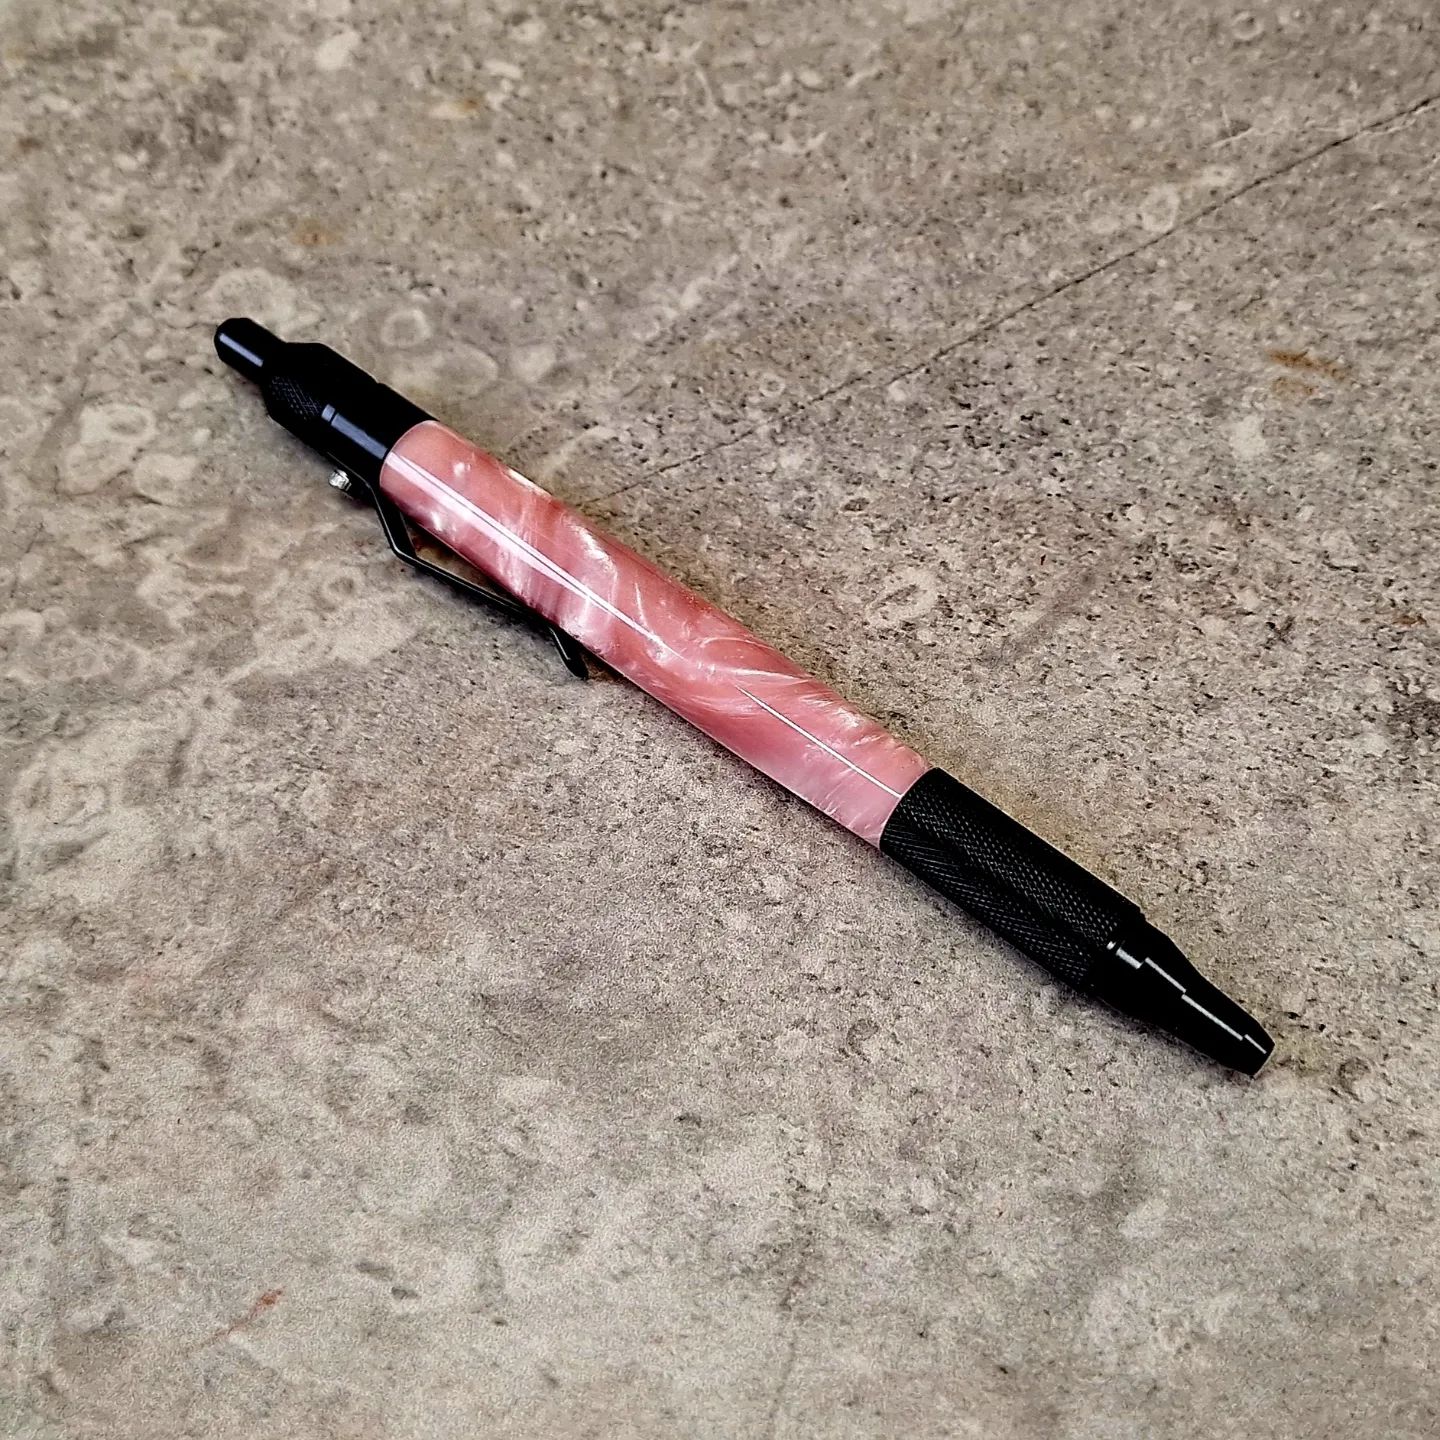 Black EDC pen with pink (pink lady pen blank) #pen #penmaking #black #aluminum